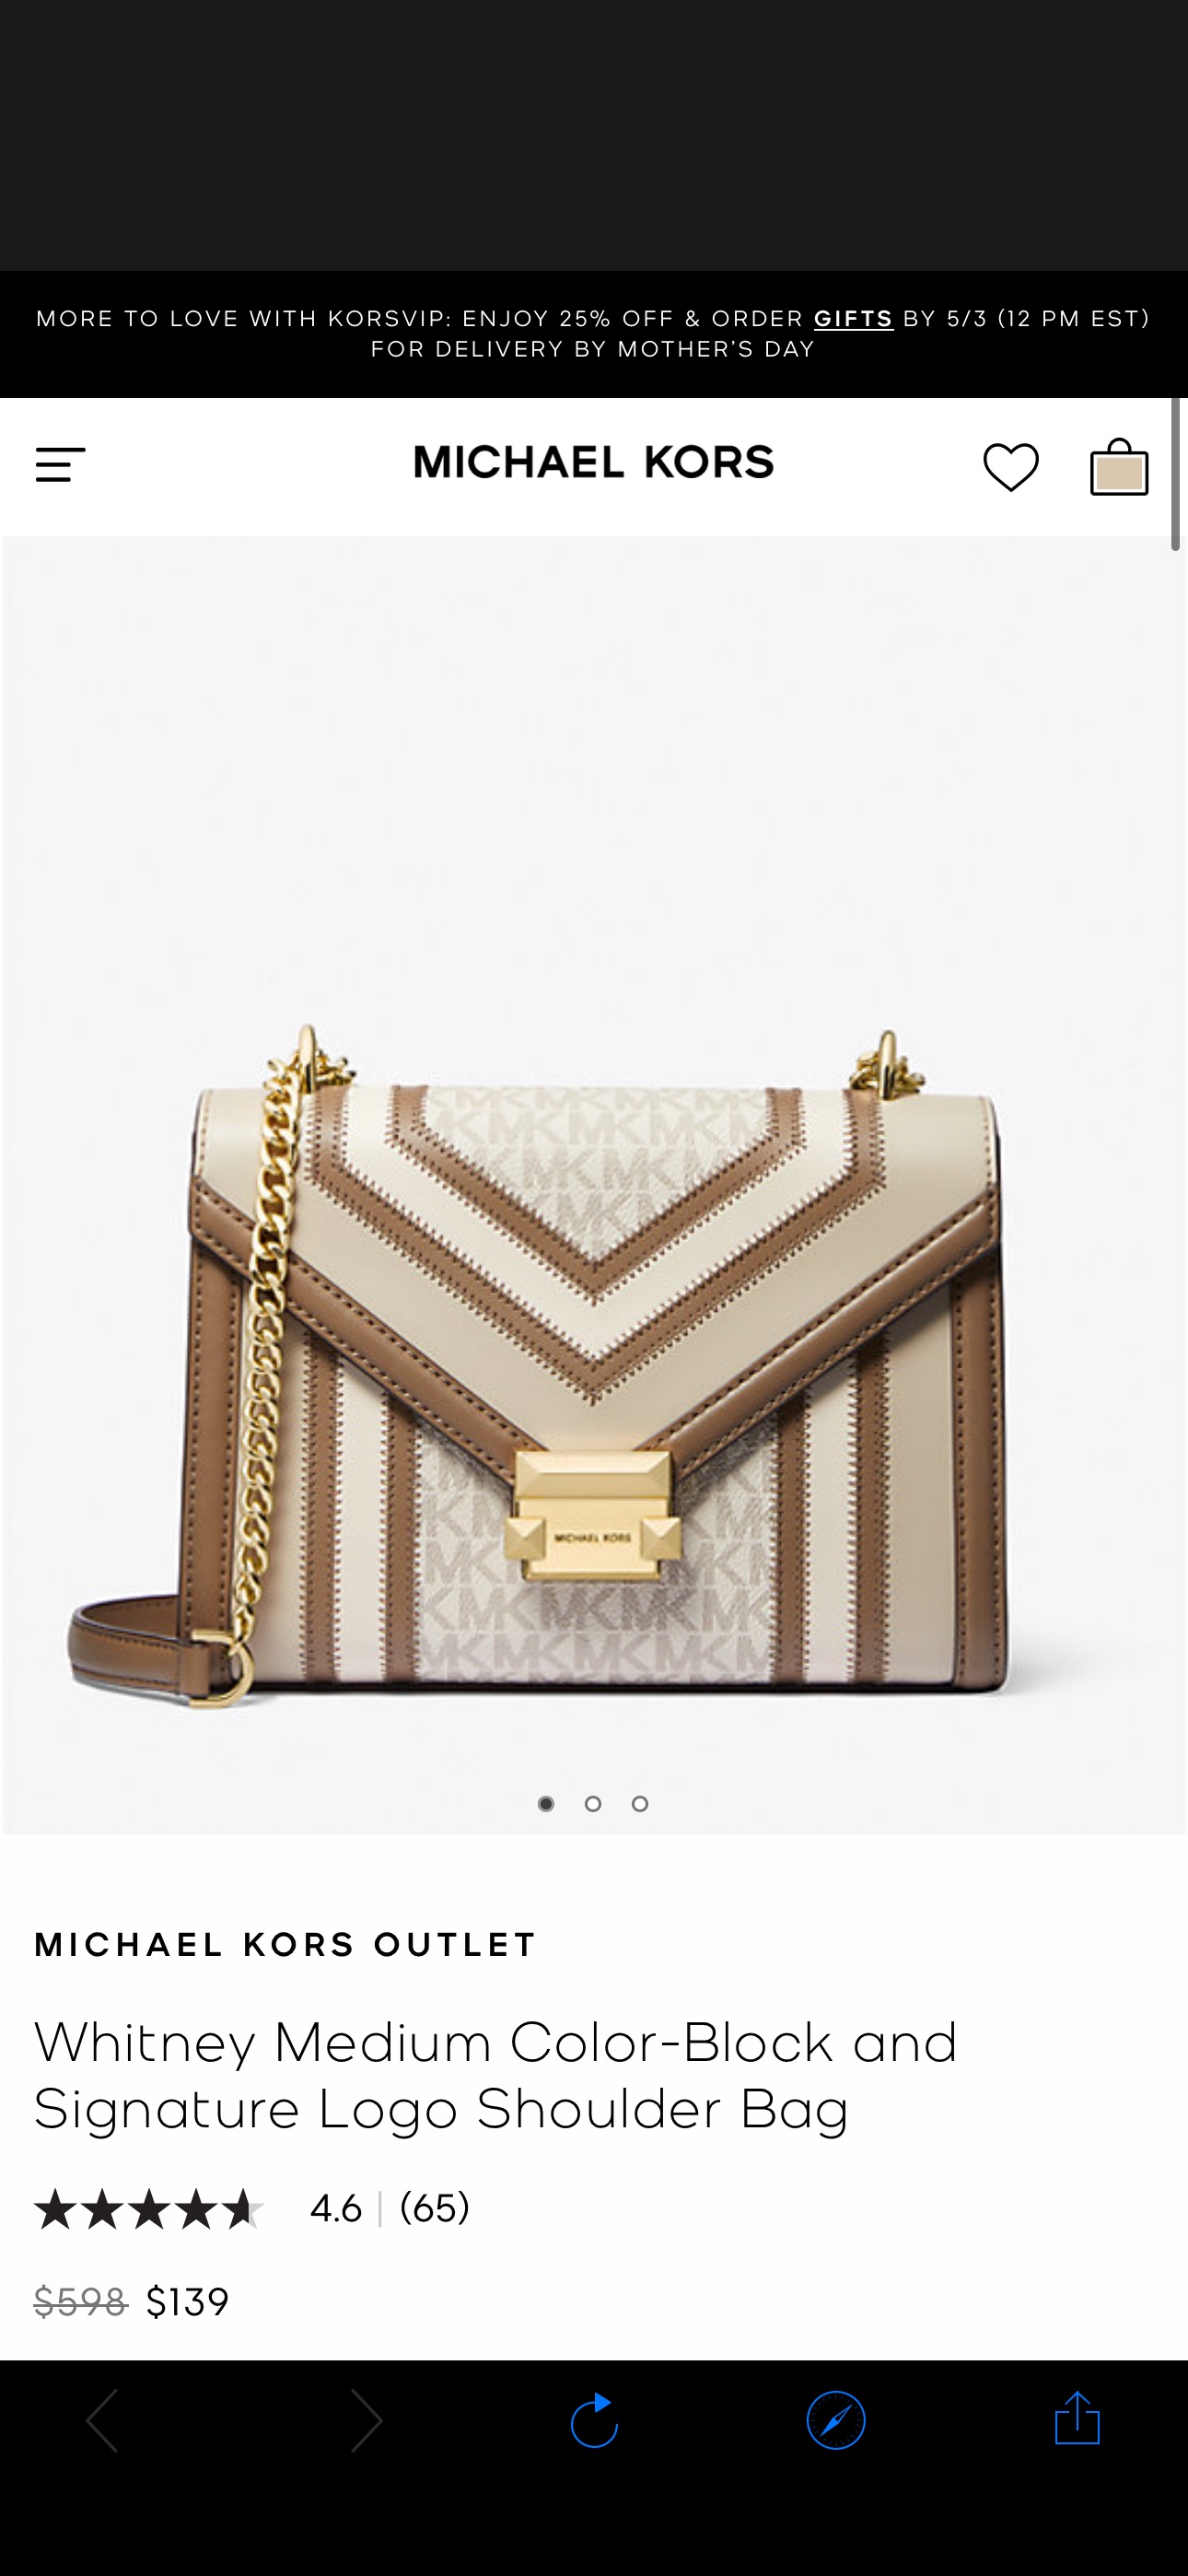 Whitney Medium Color-Block and Signature Logo Shoulder Bag | Michael Kors